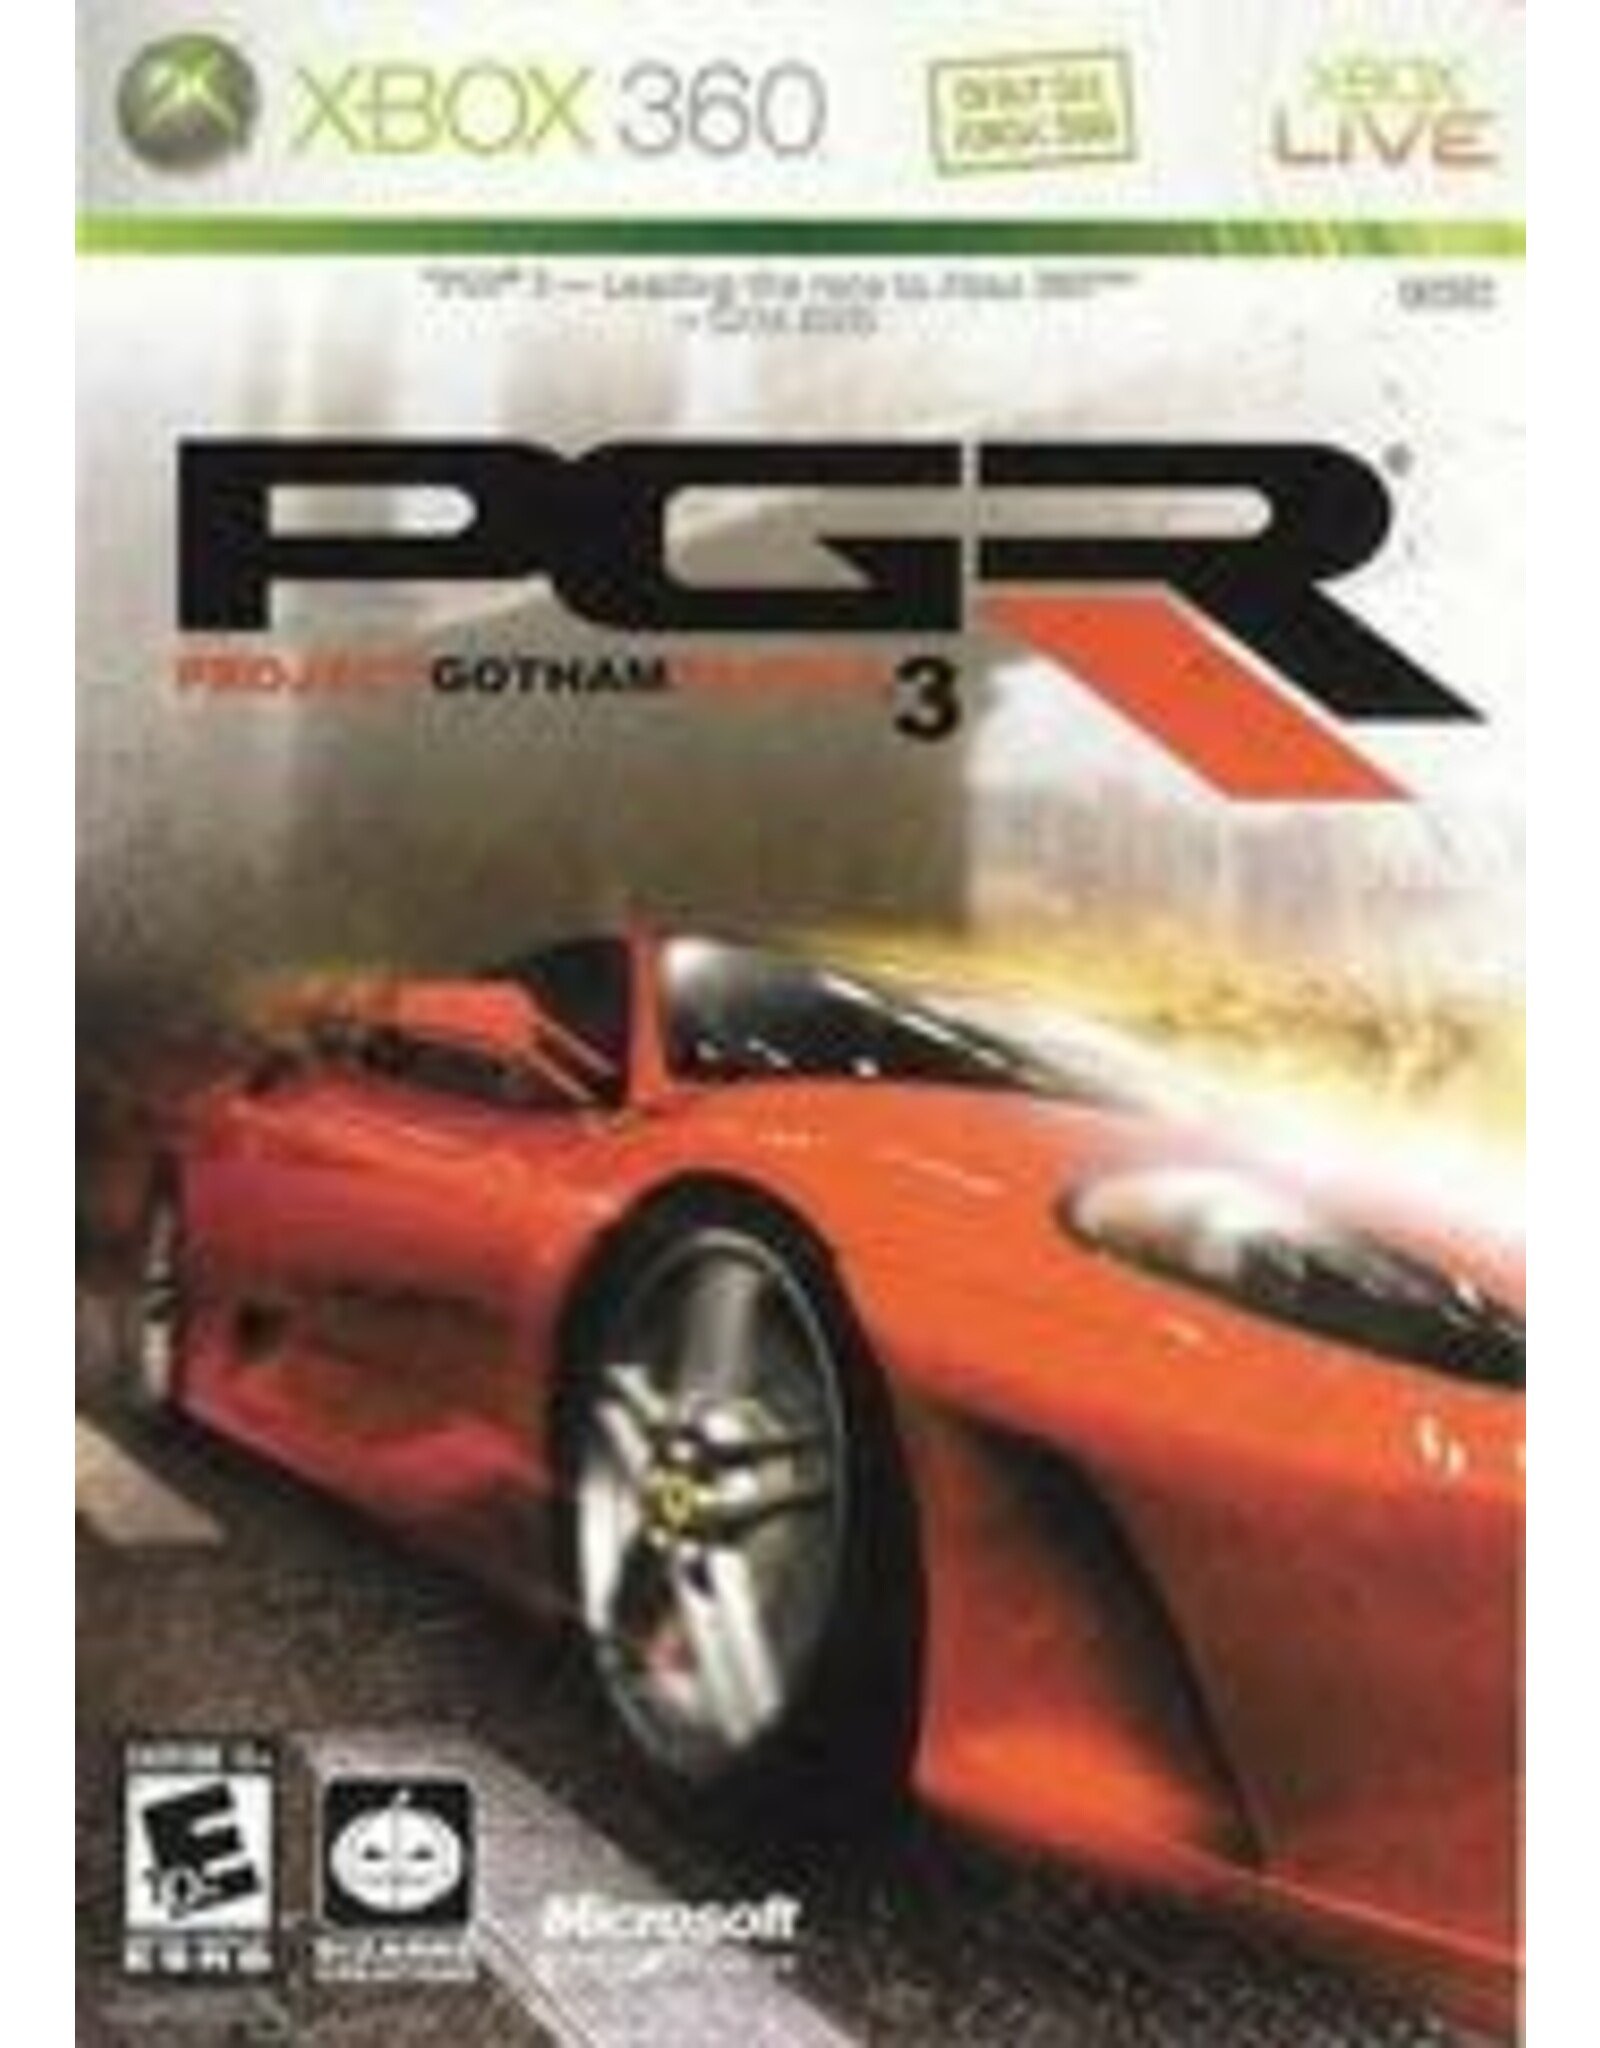 Xbox 360 Project Gotham Racing 3 (No Manual)